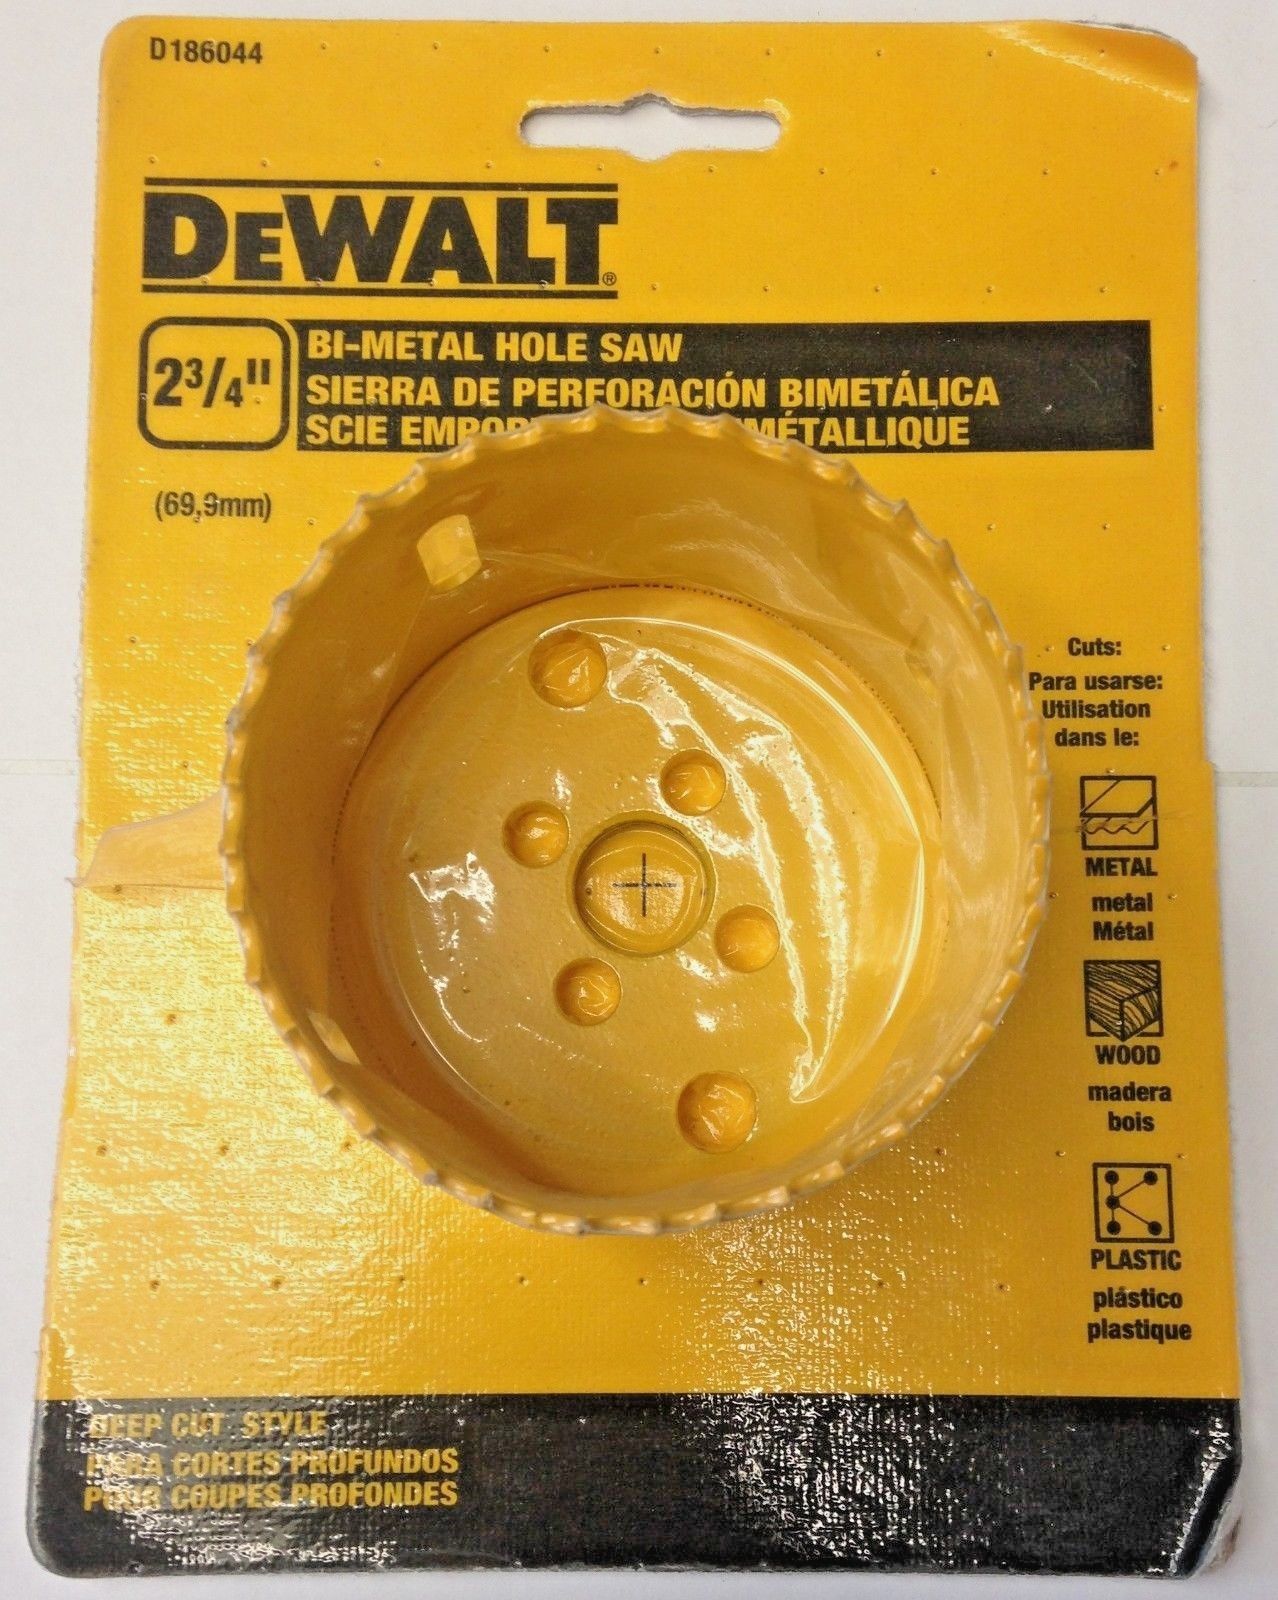 Dewalt D186044 2-3/4" Bi-Metal Hole Saw For Metal, Wood & Plastic USA